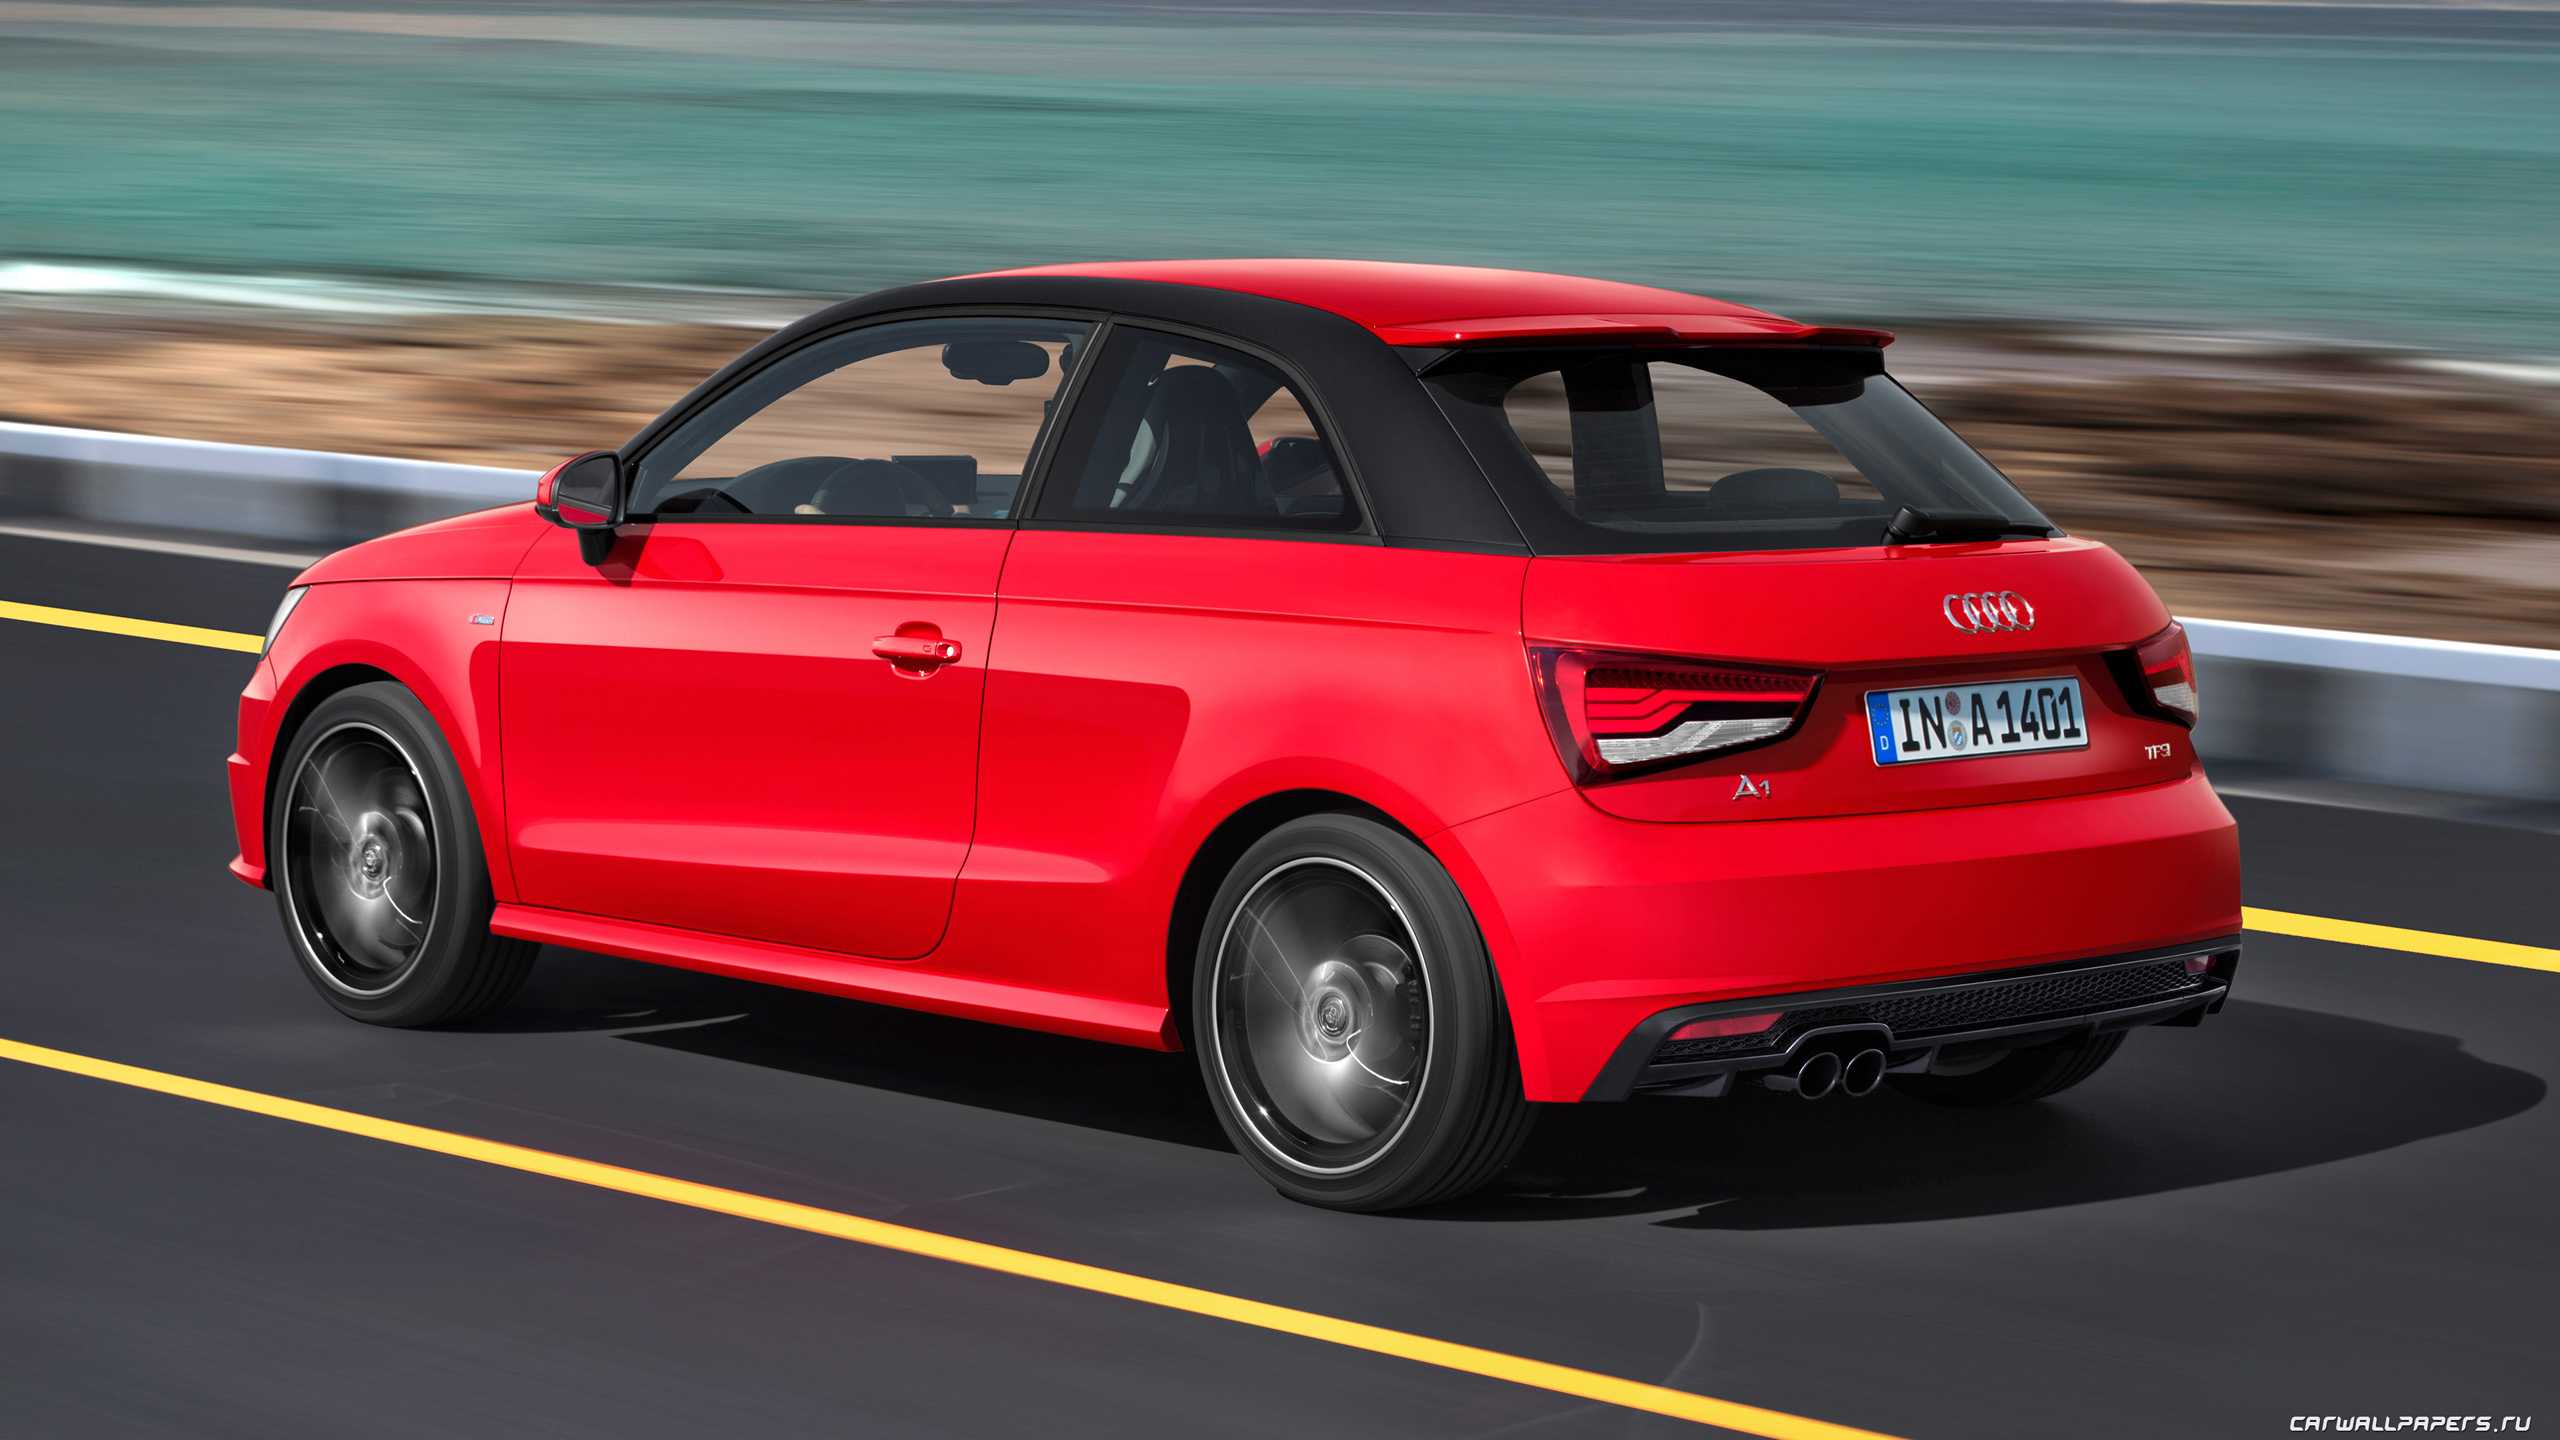 Автомобили Audi S1 и S1 Sportback характеристики видео